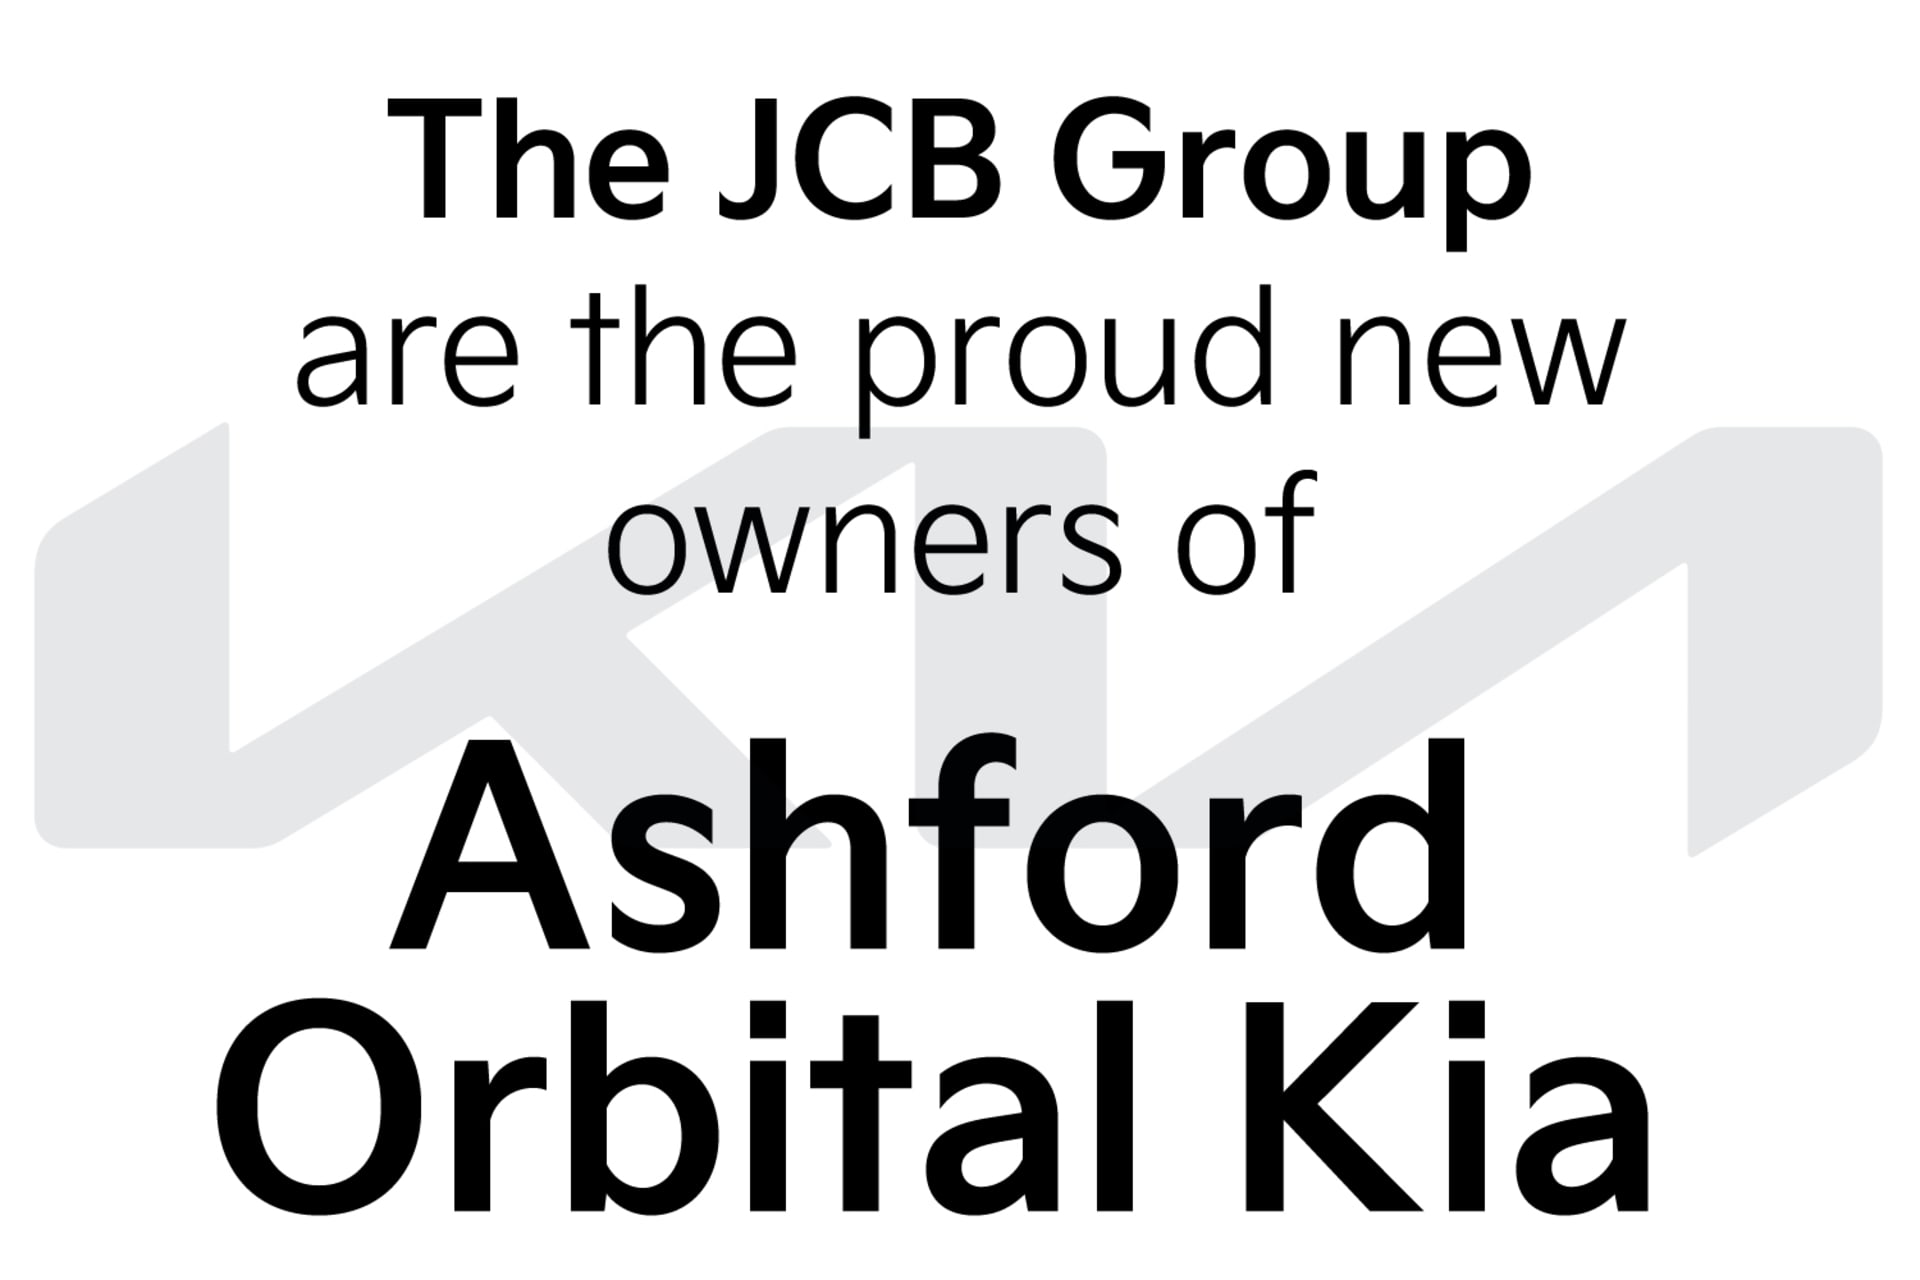 Ashford Orbital Kia joins the JCB Group